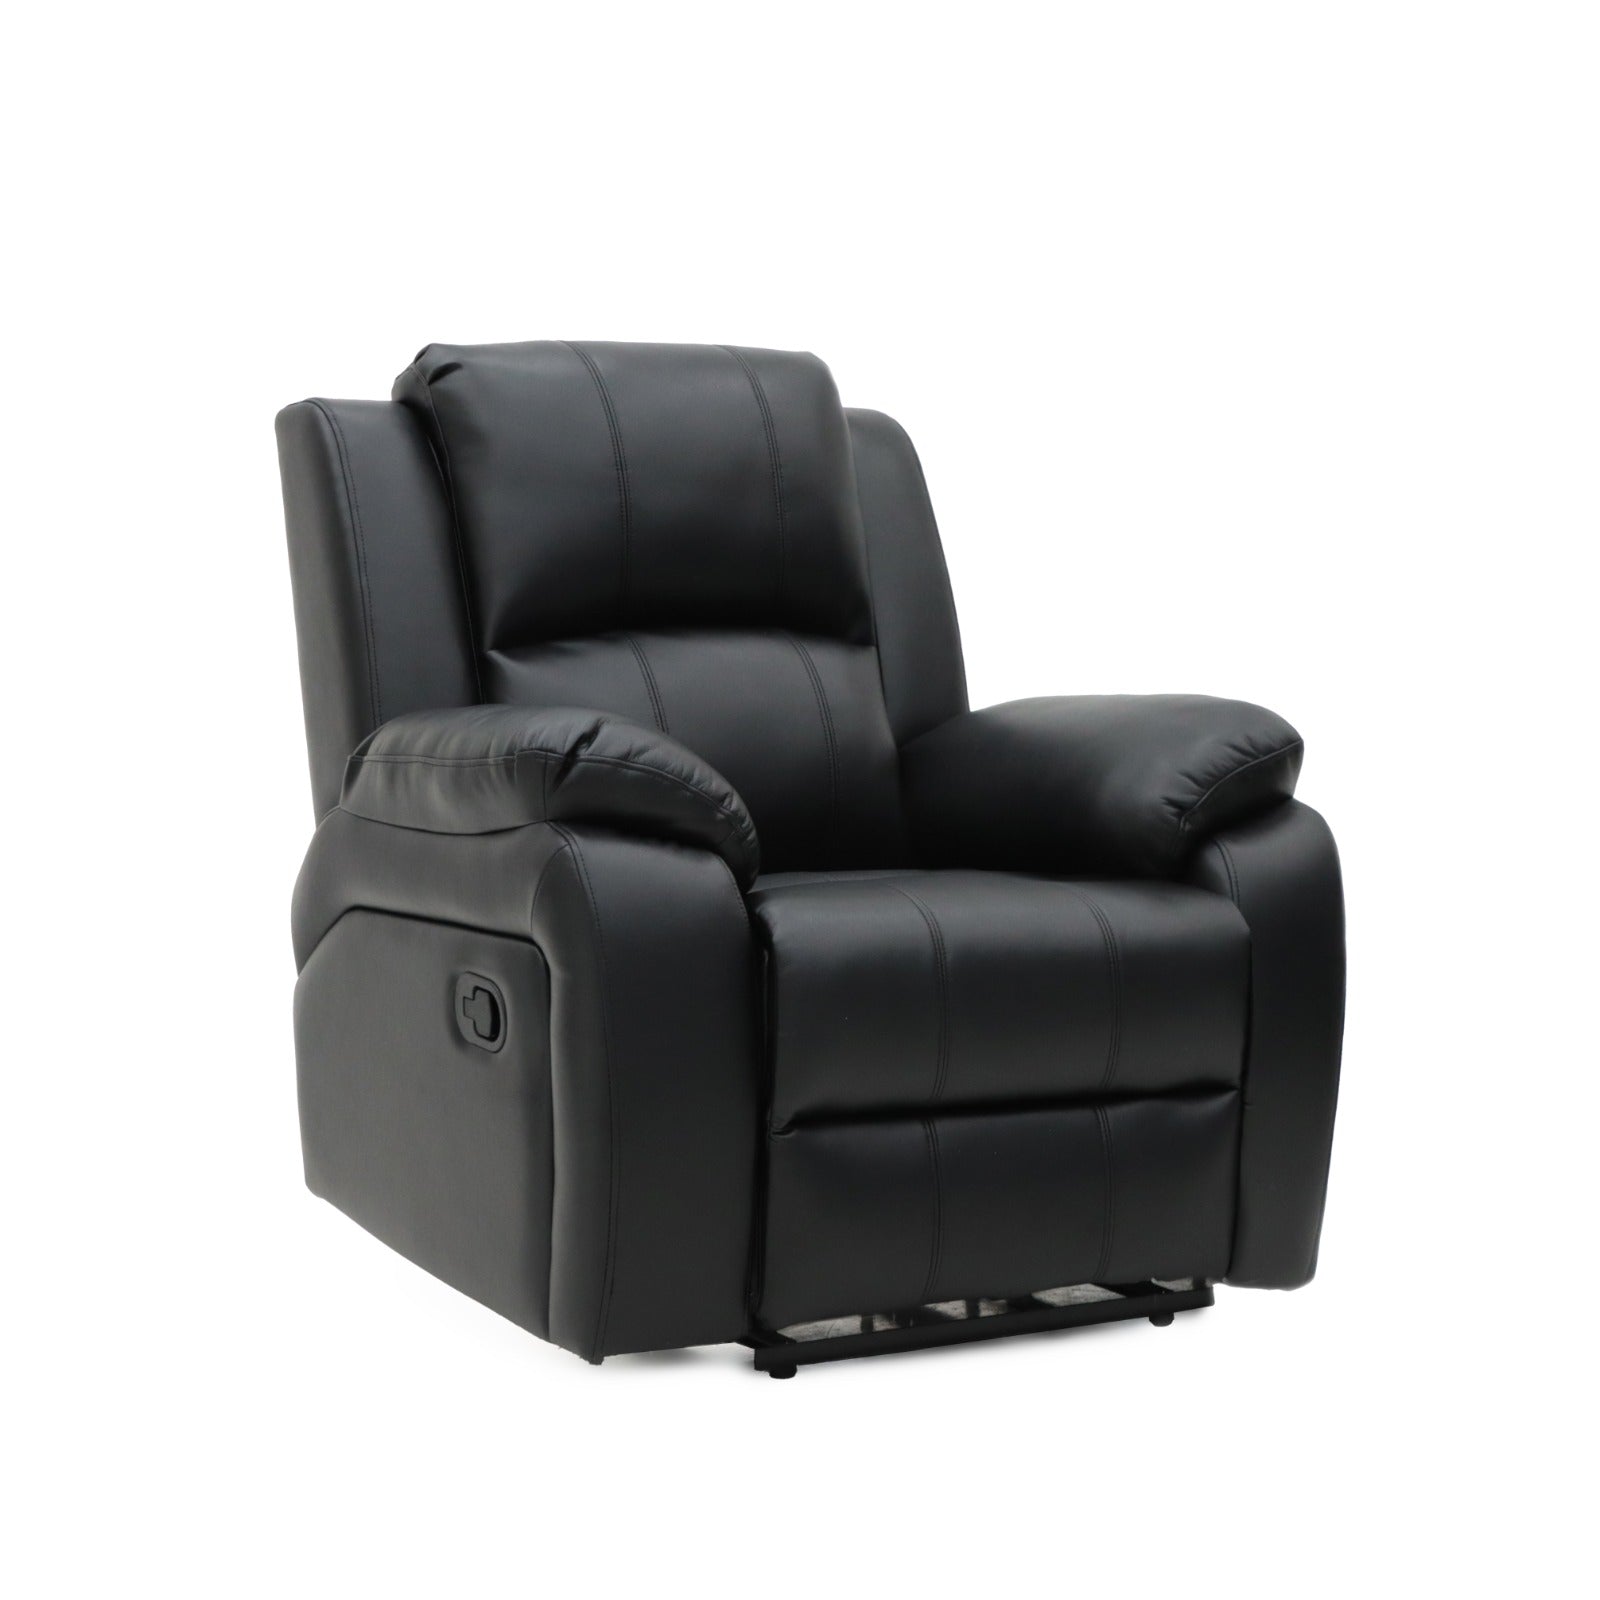 Darwin Manual Recliner Chair Black Leather